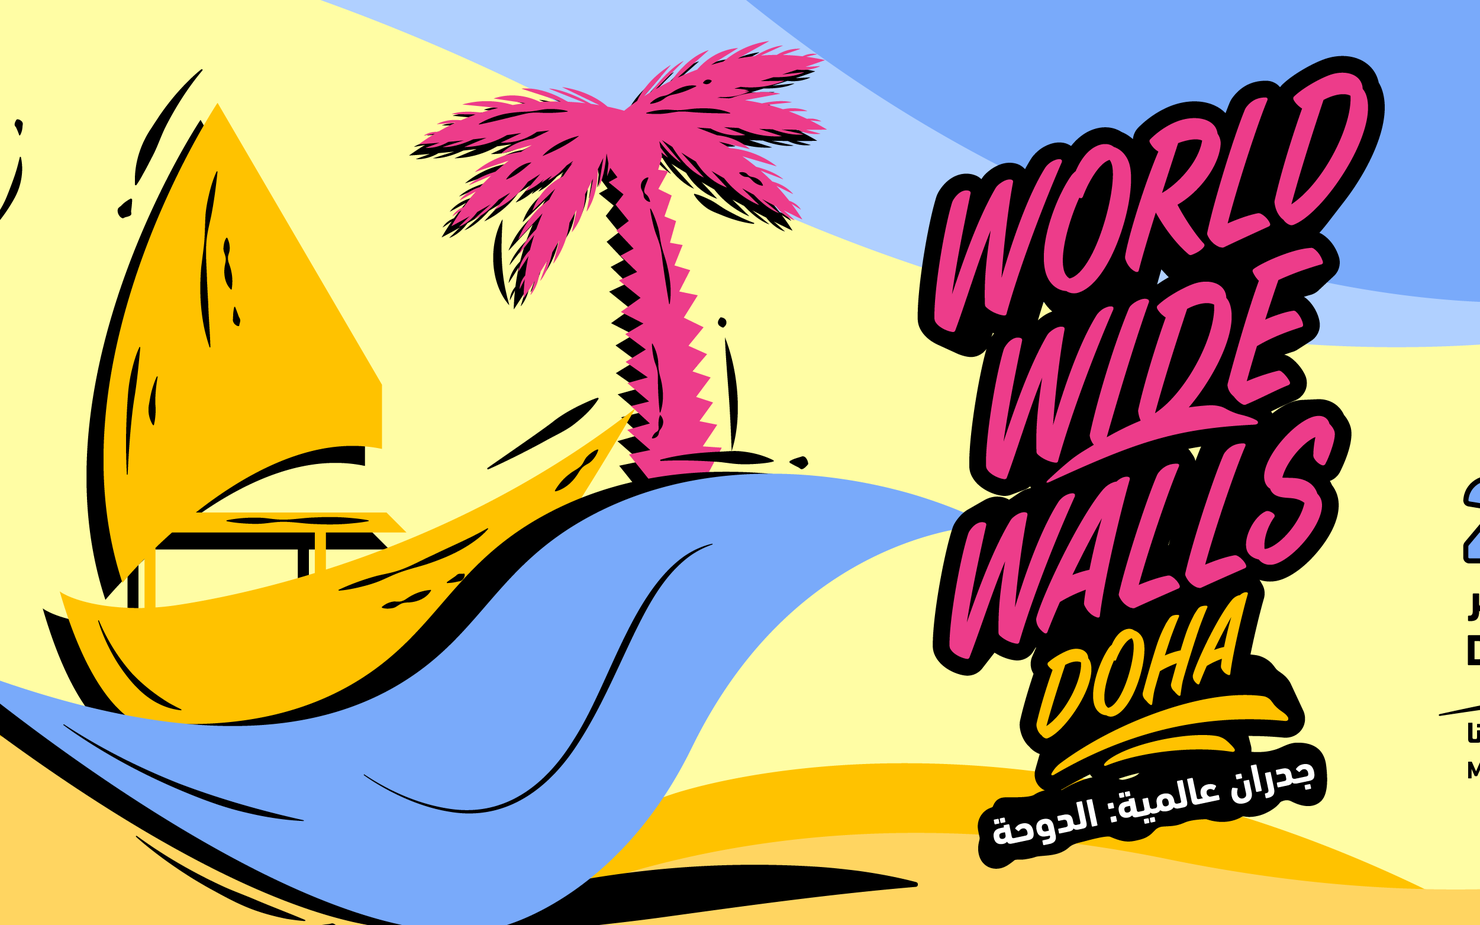 Walls: Museums Wide Doha Qatar - World